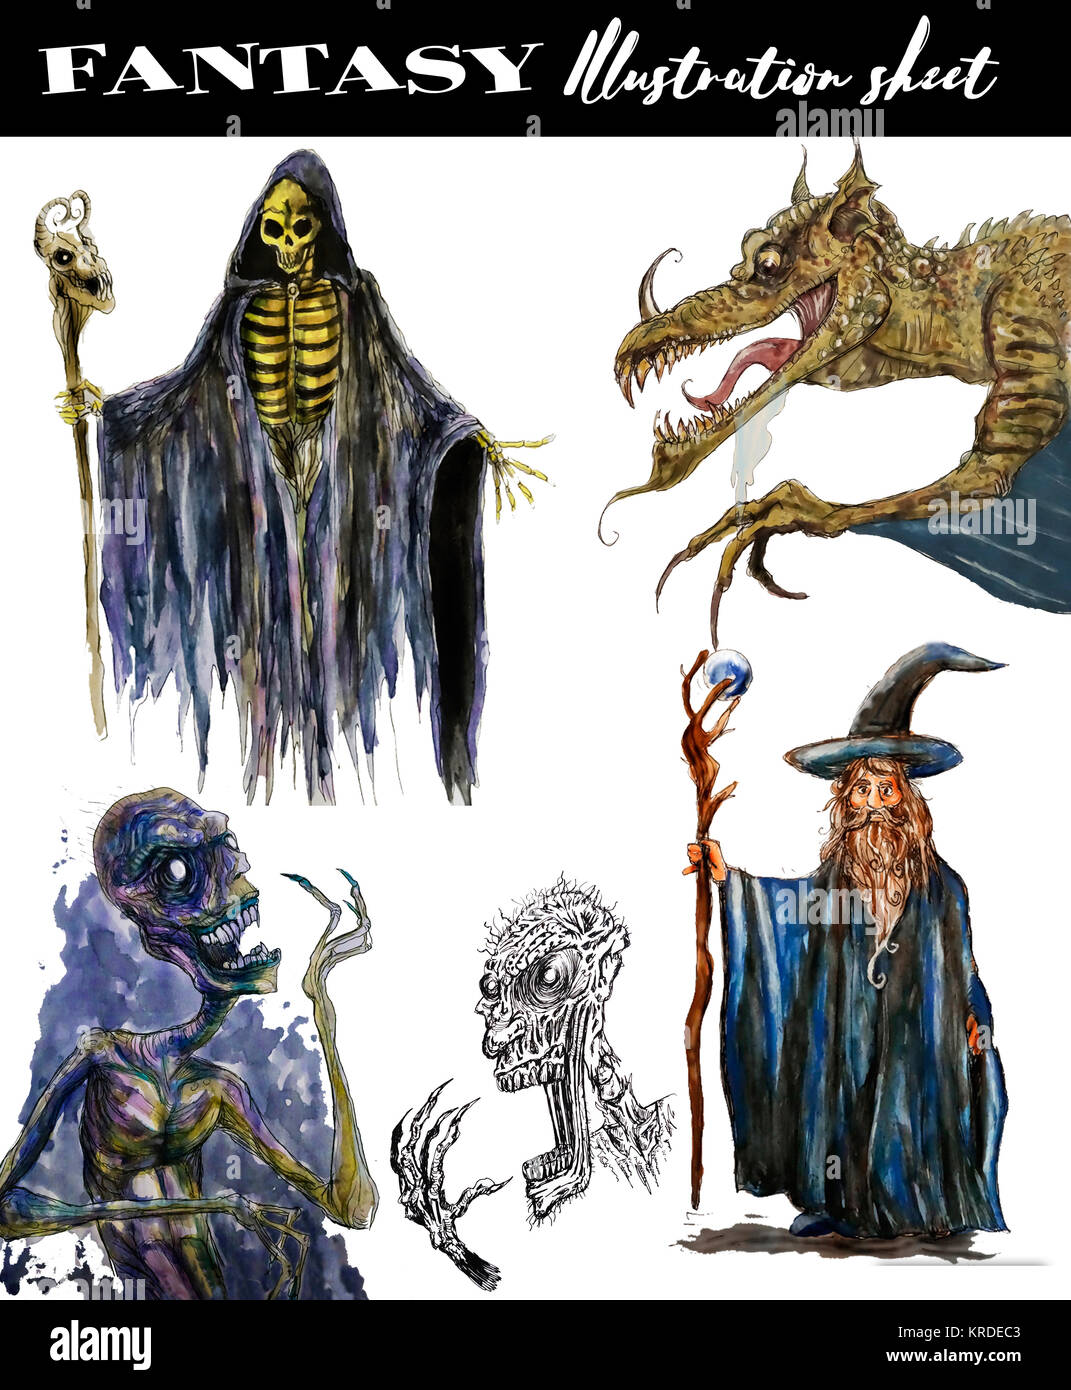 an assortment of fantasy illustrations Stock Photo